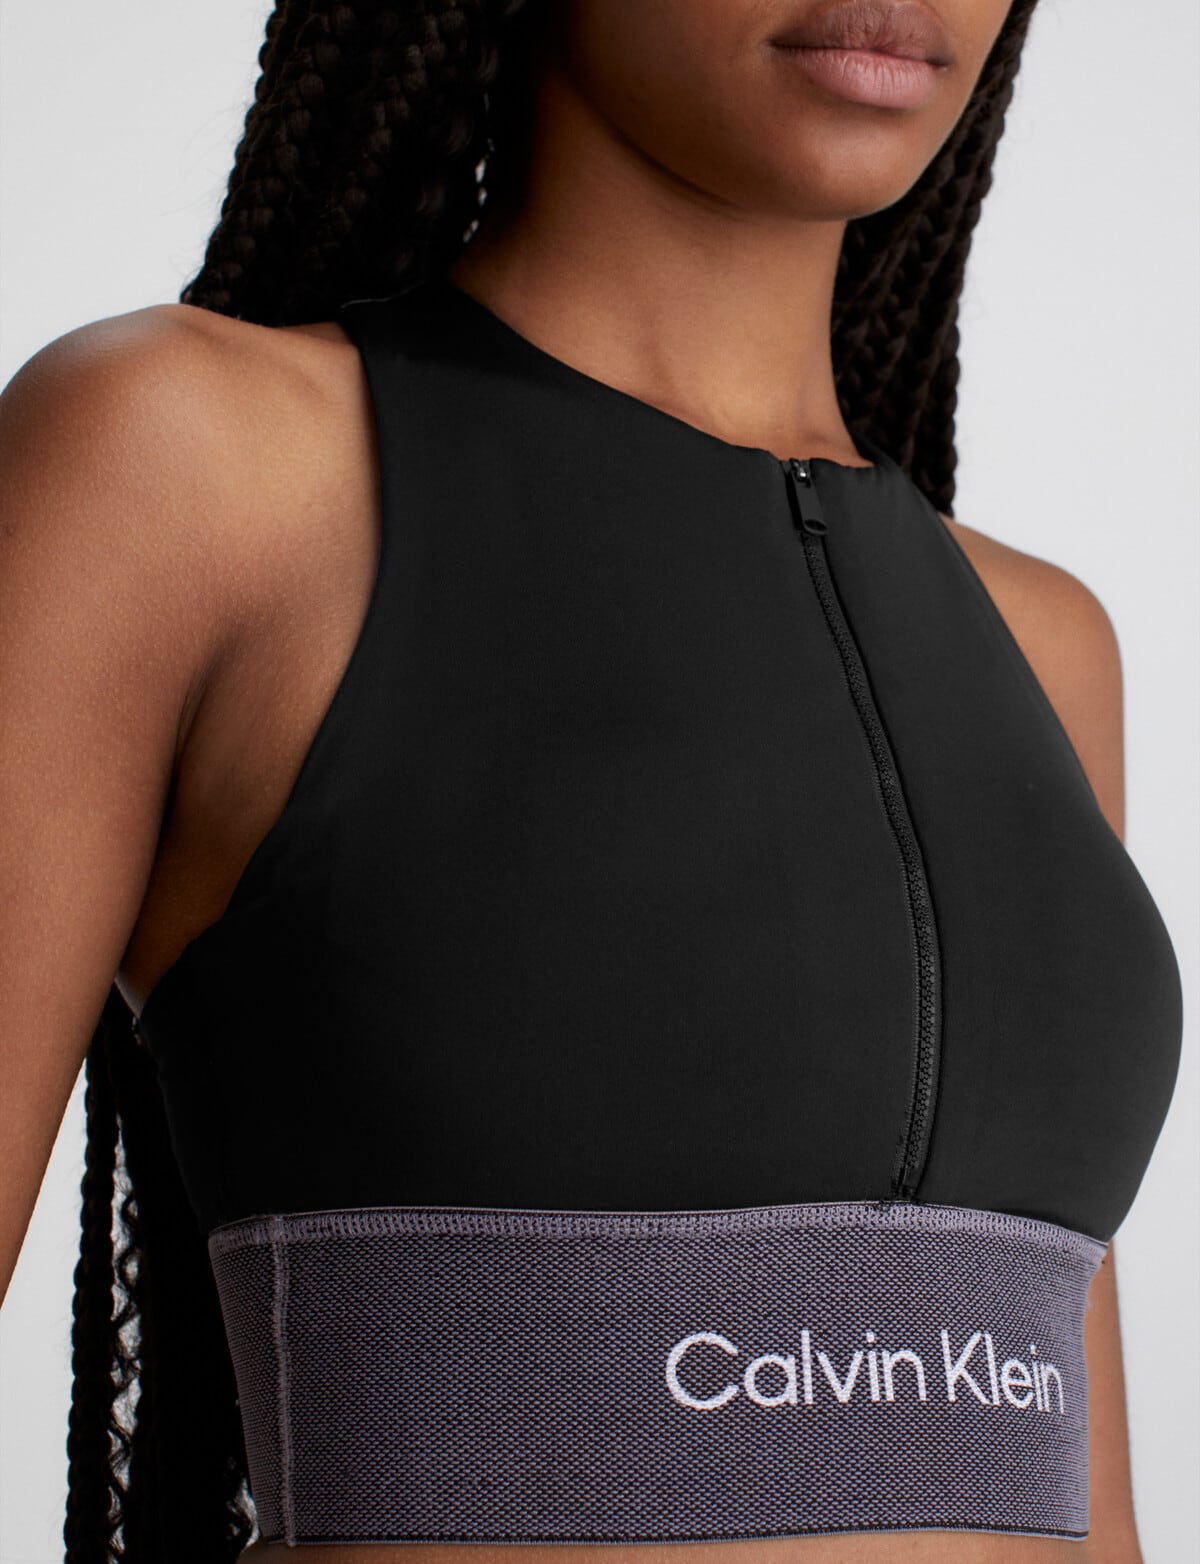 Calvin Klein Medium Support Bra, Black Beauty - Activewear